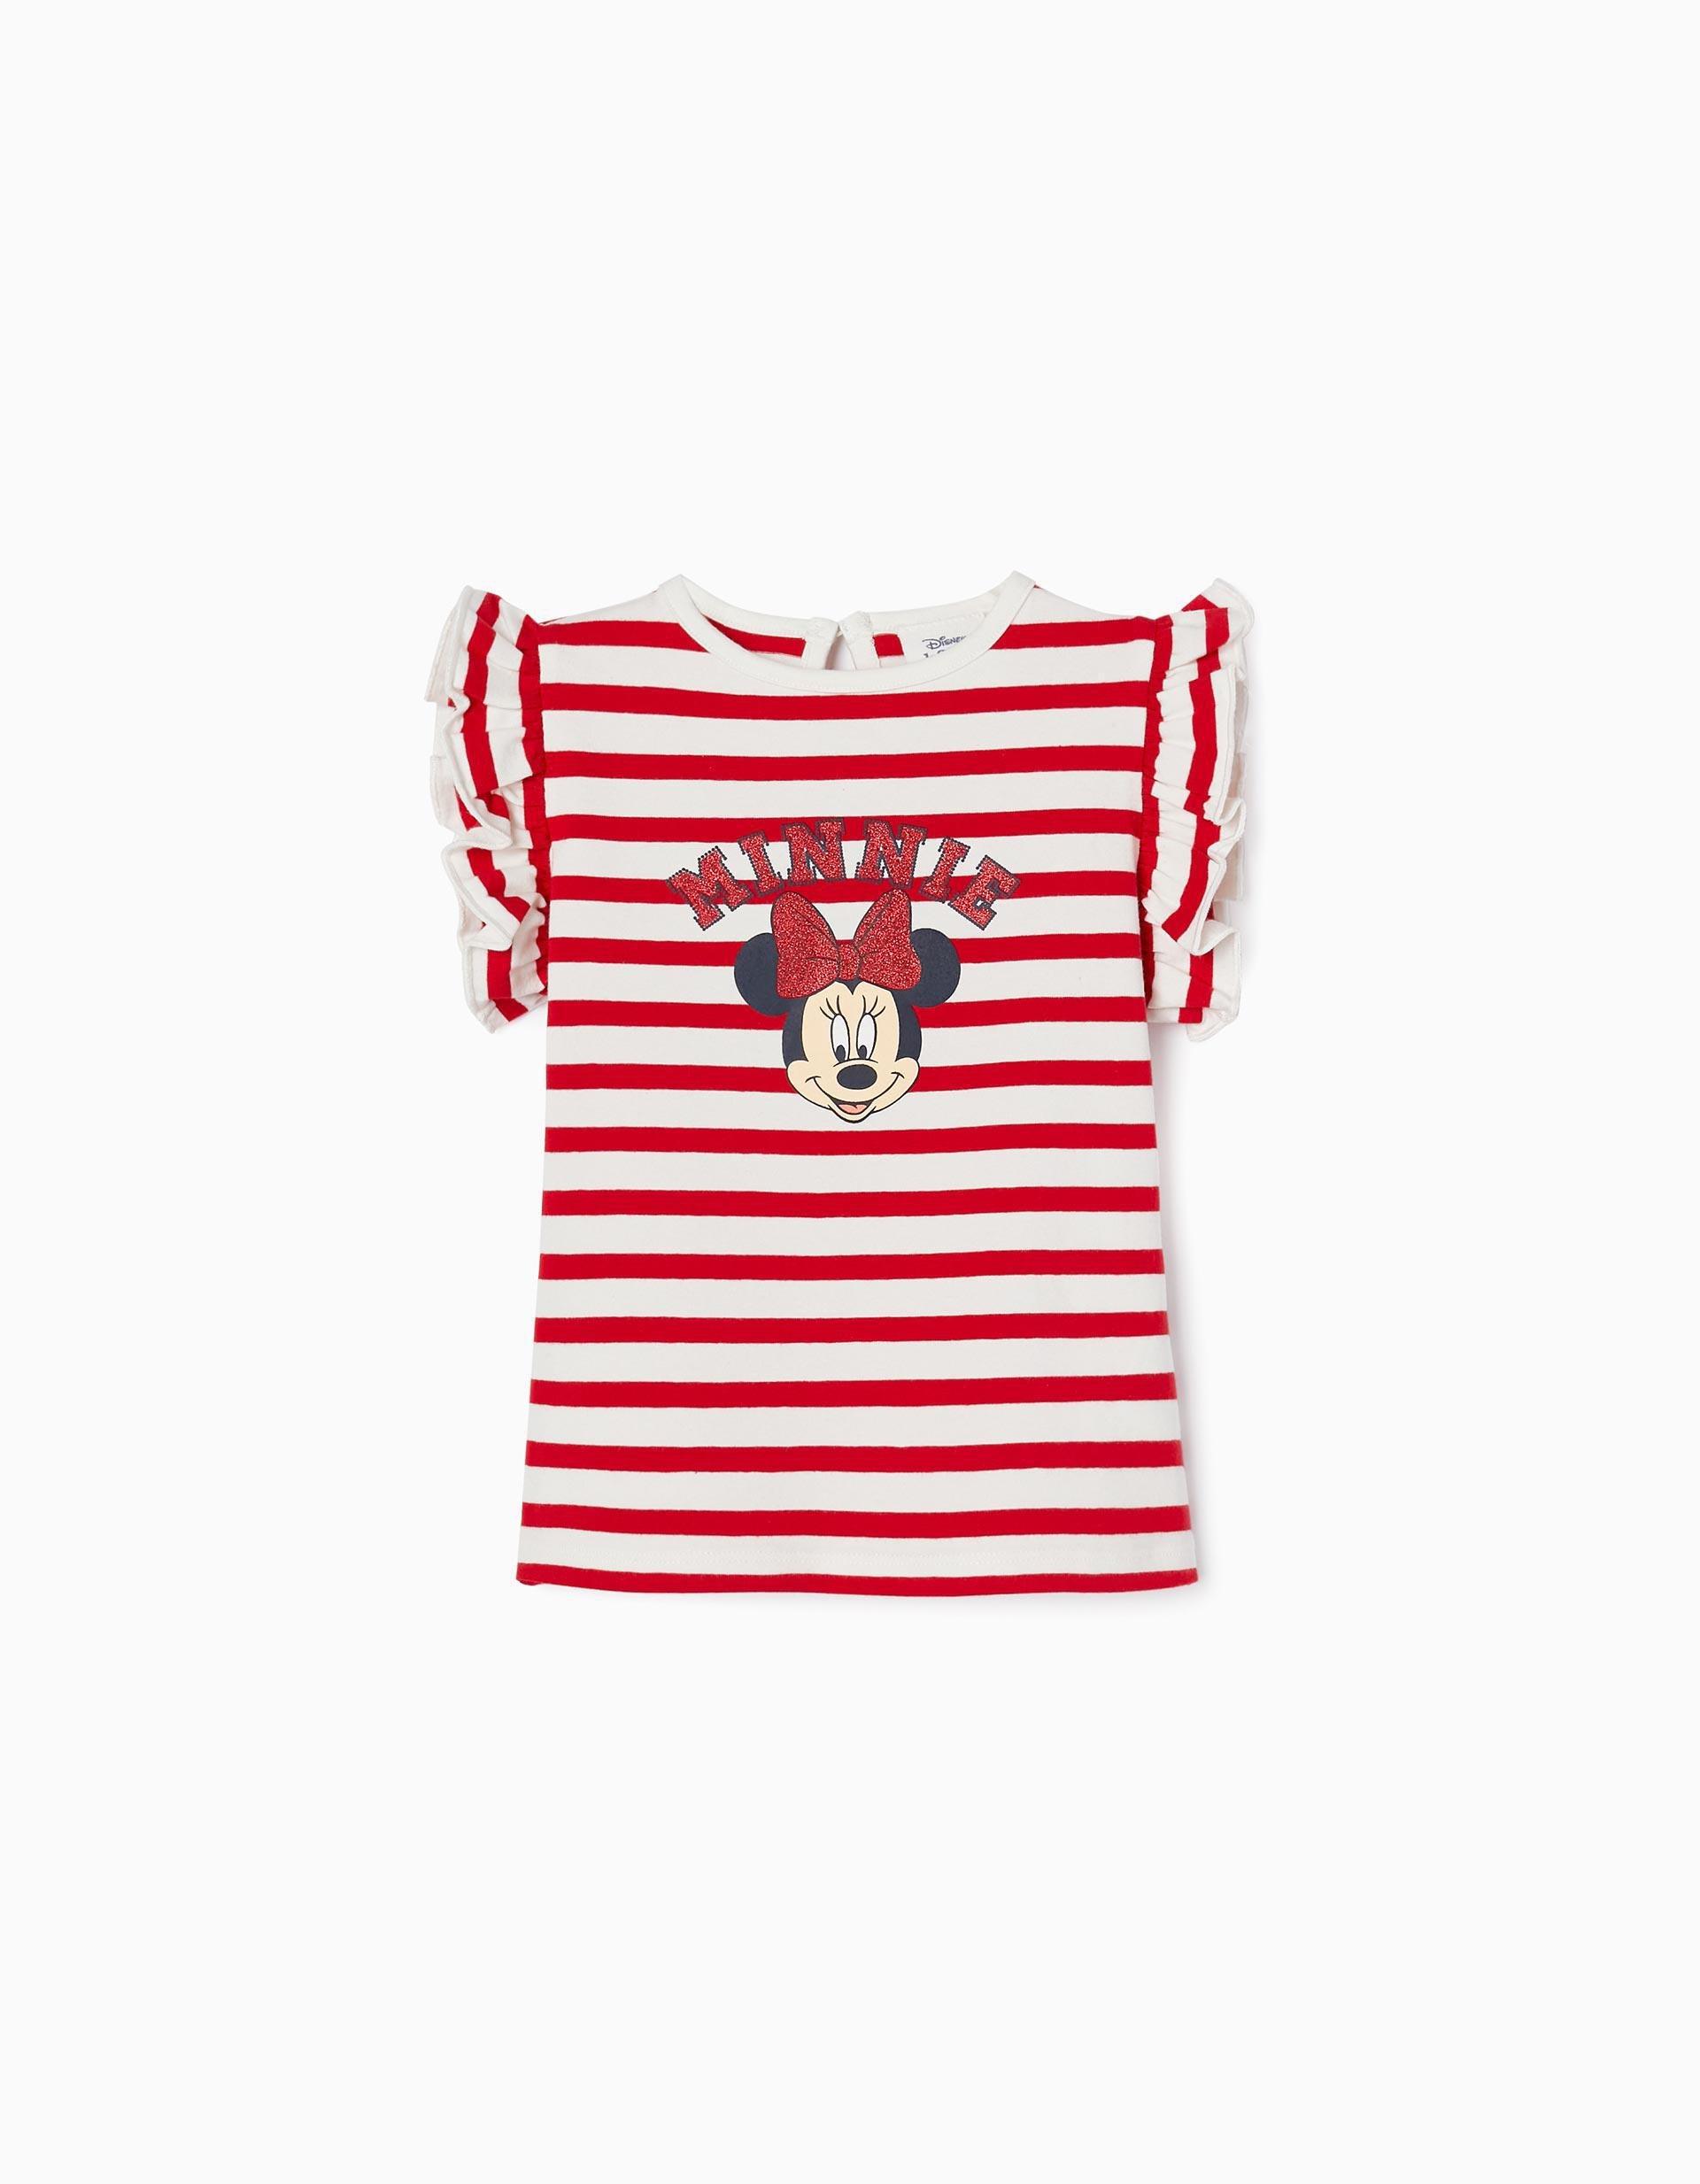 Gant - Red Striped T-Shirt, Baby Girls